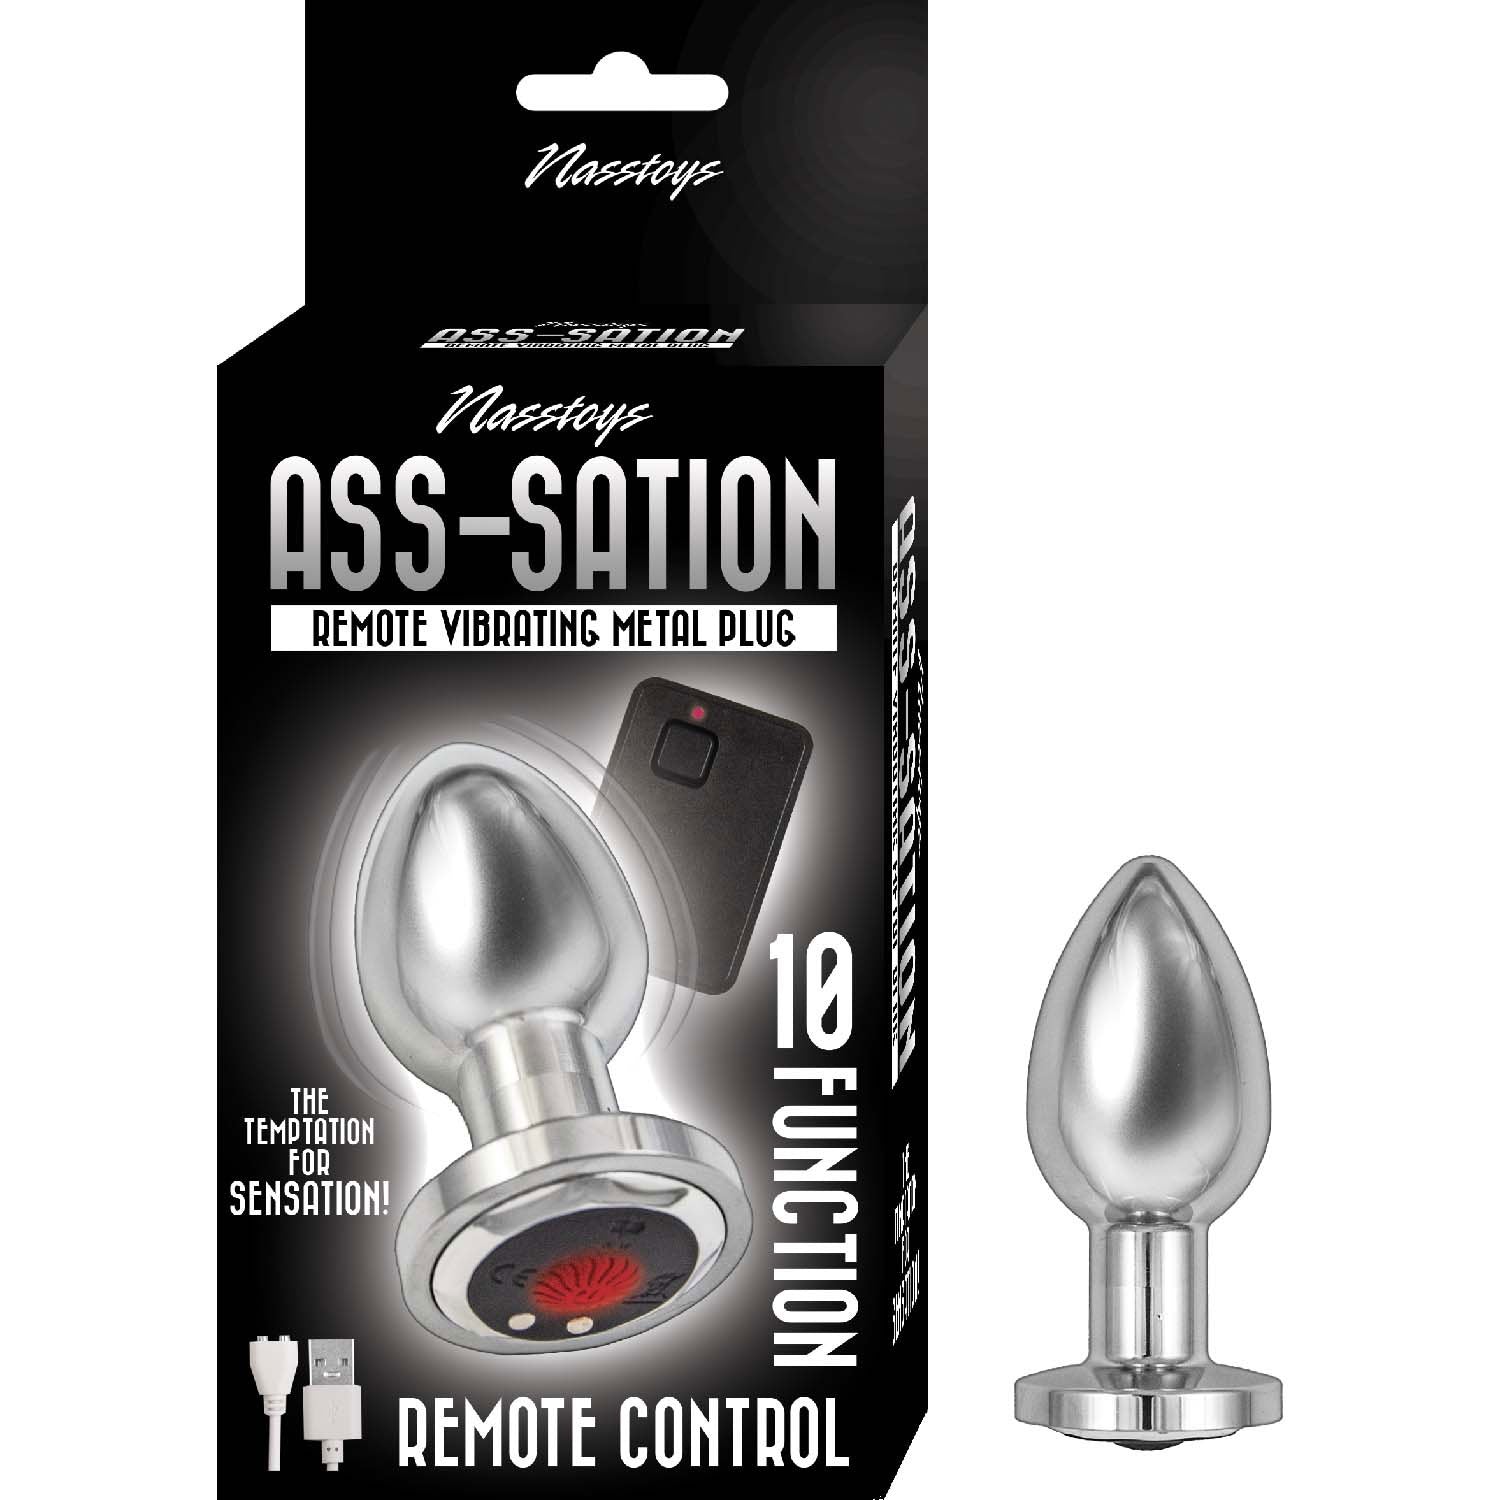 Ass-sation Remote Vibrating Metal Plug